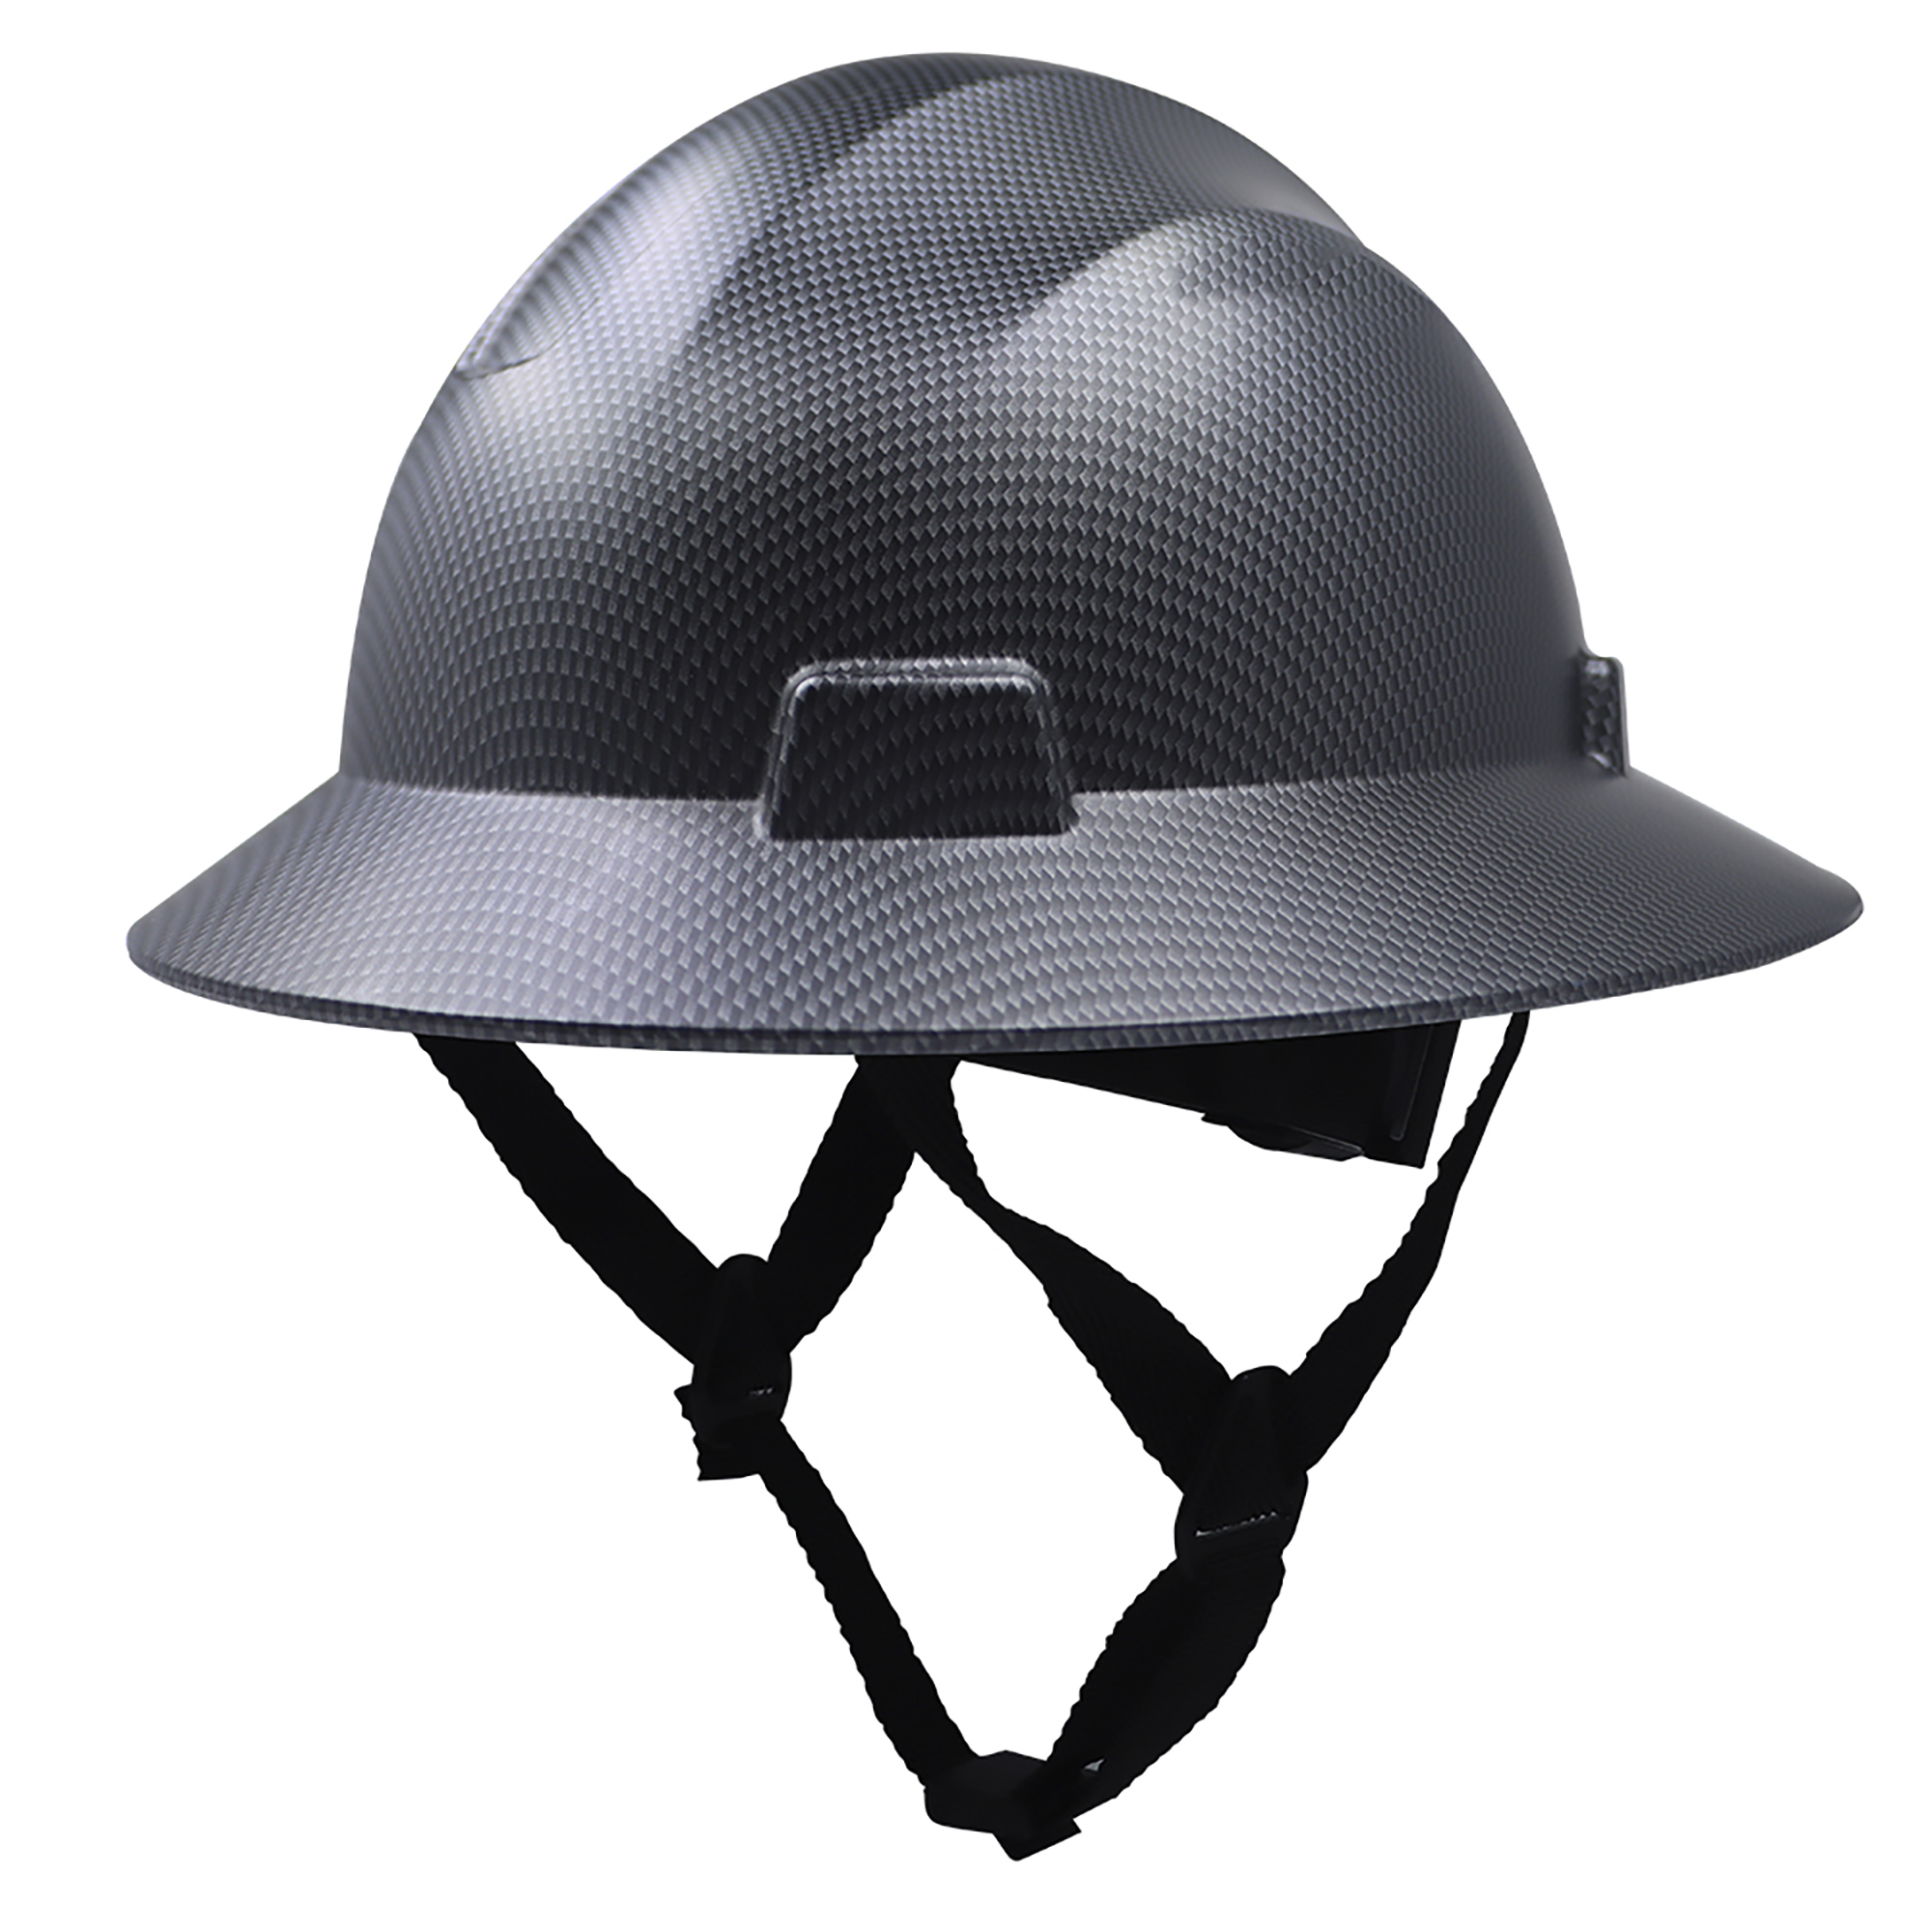 General Electric, BLACK CARBON FIBER FULL BRIM HARD HAT NON-VENTED, Size One Size, Color Black Carbon Fiber, Hat Style Full Brim, Model GH329CB